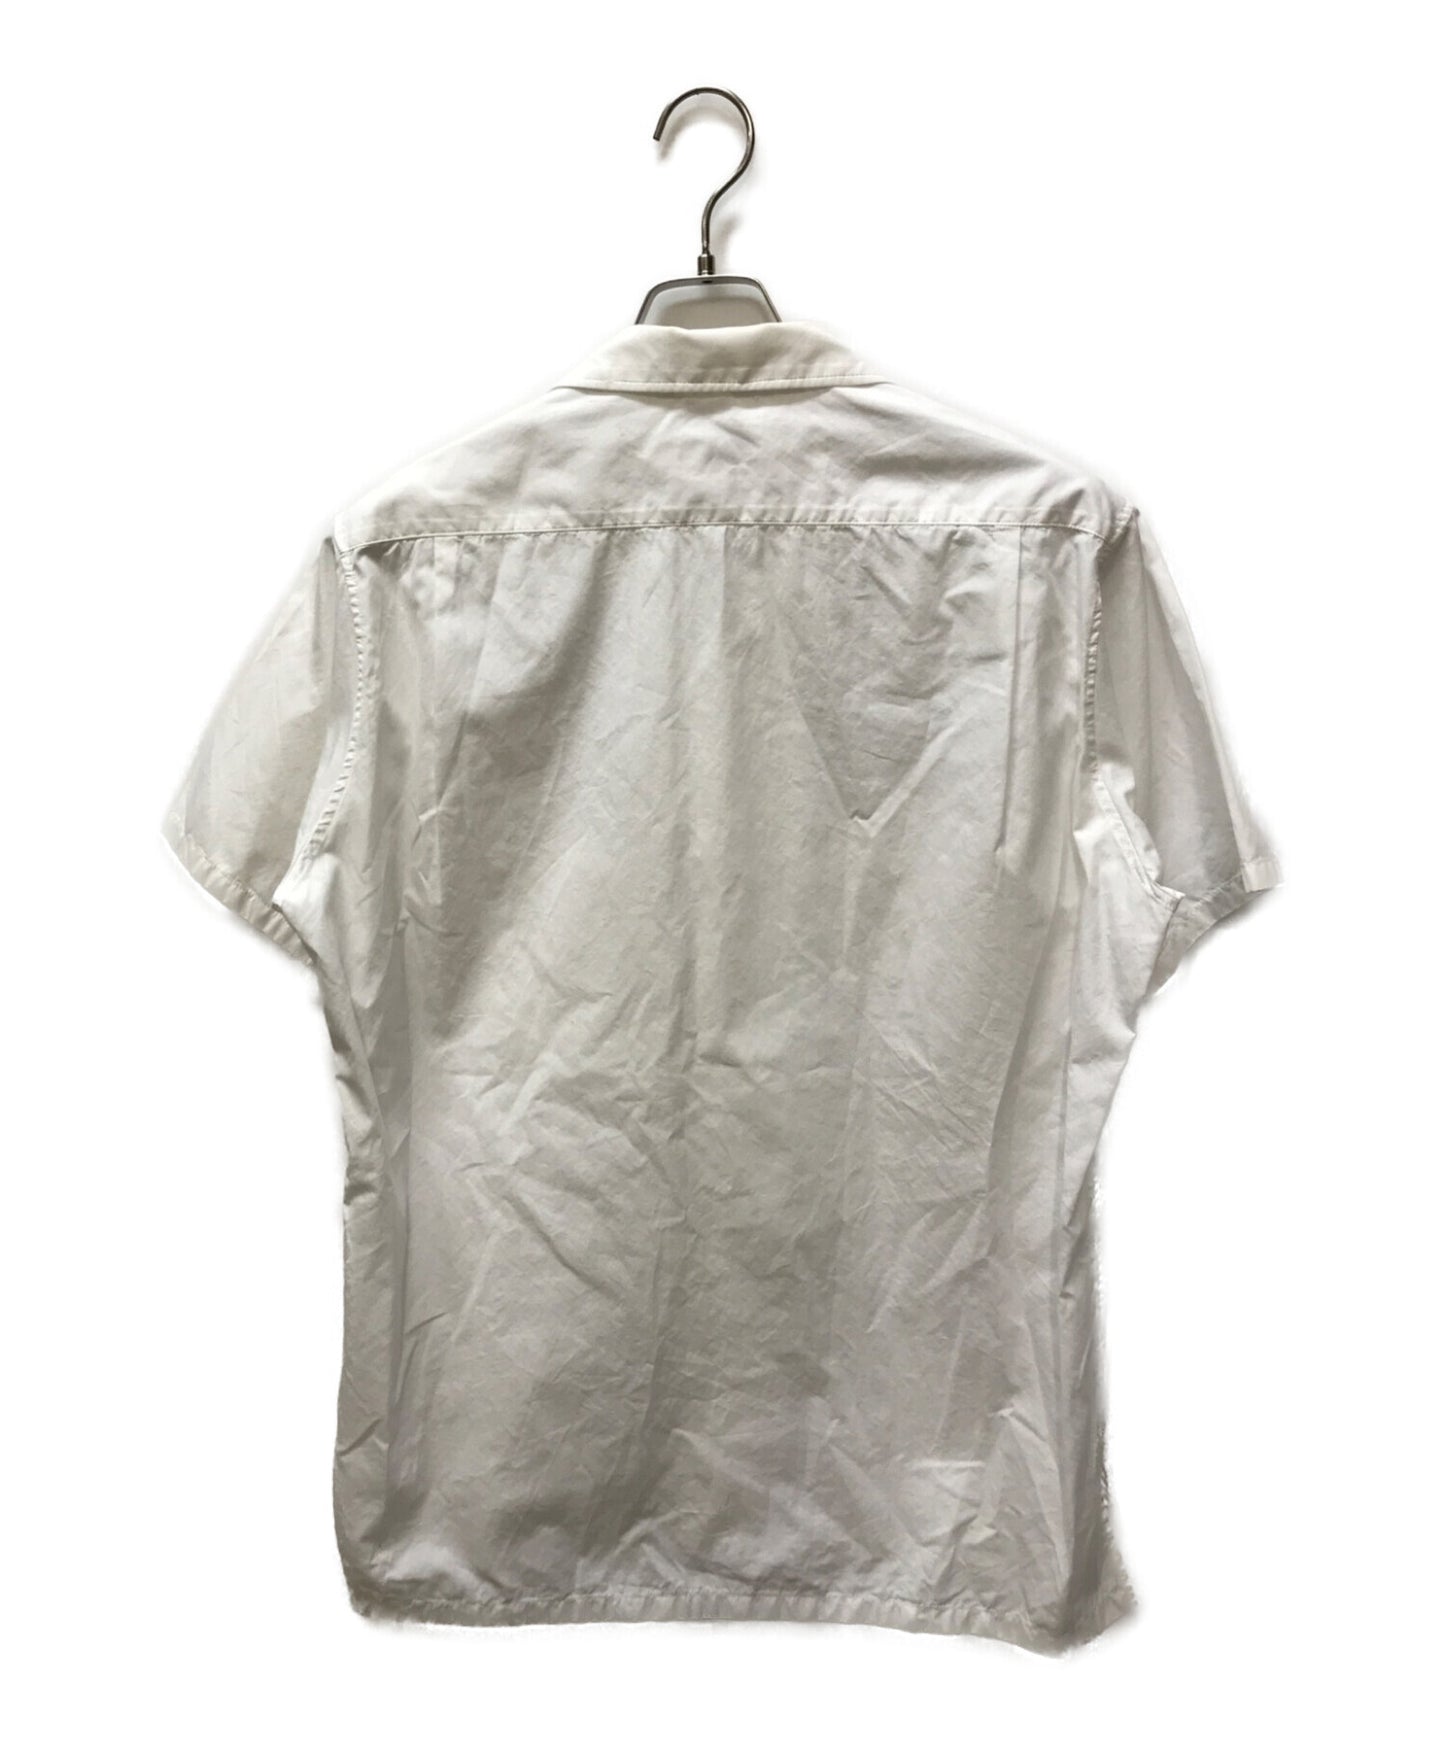 Yohji Yamamoto Pour Homme开放式衬衫HG-B65-095